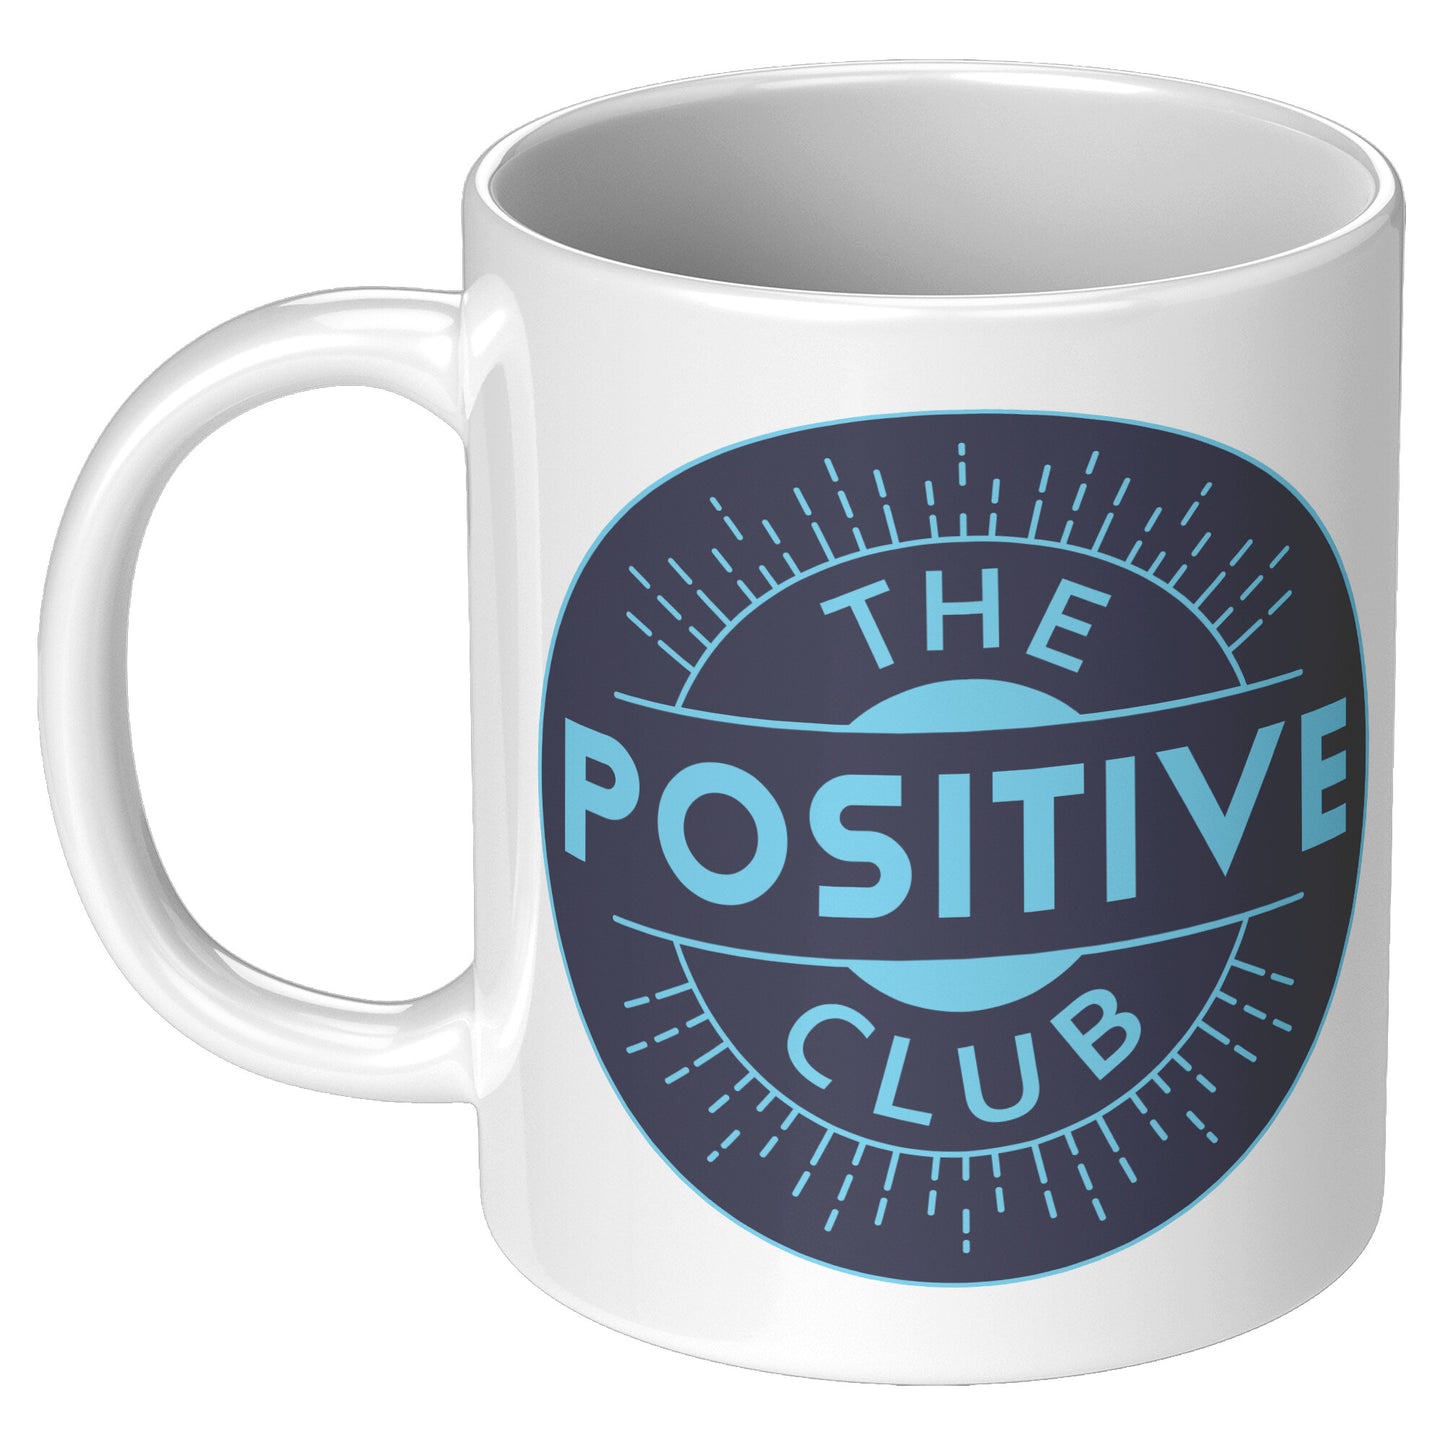 11oz White Mug Logo The Positive Club ( Free Shipping )